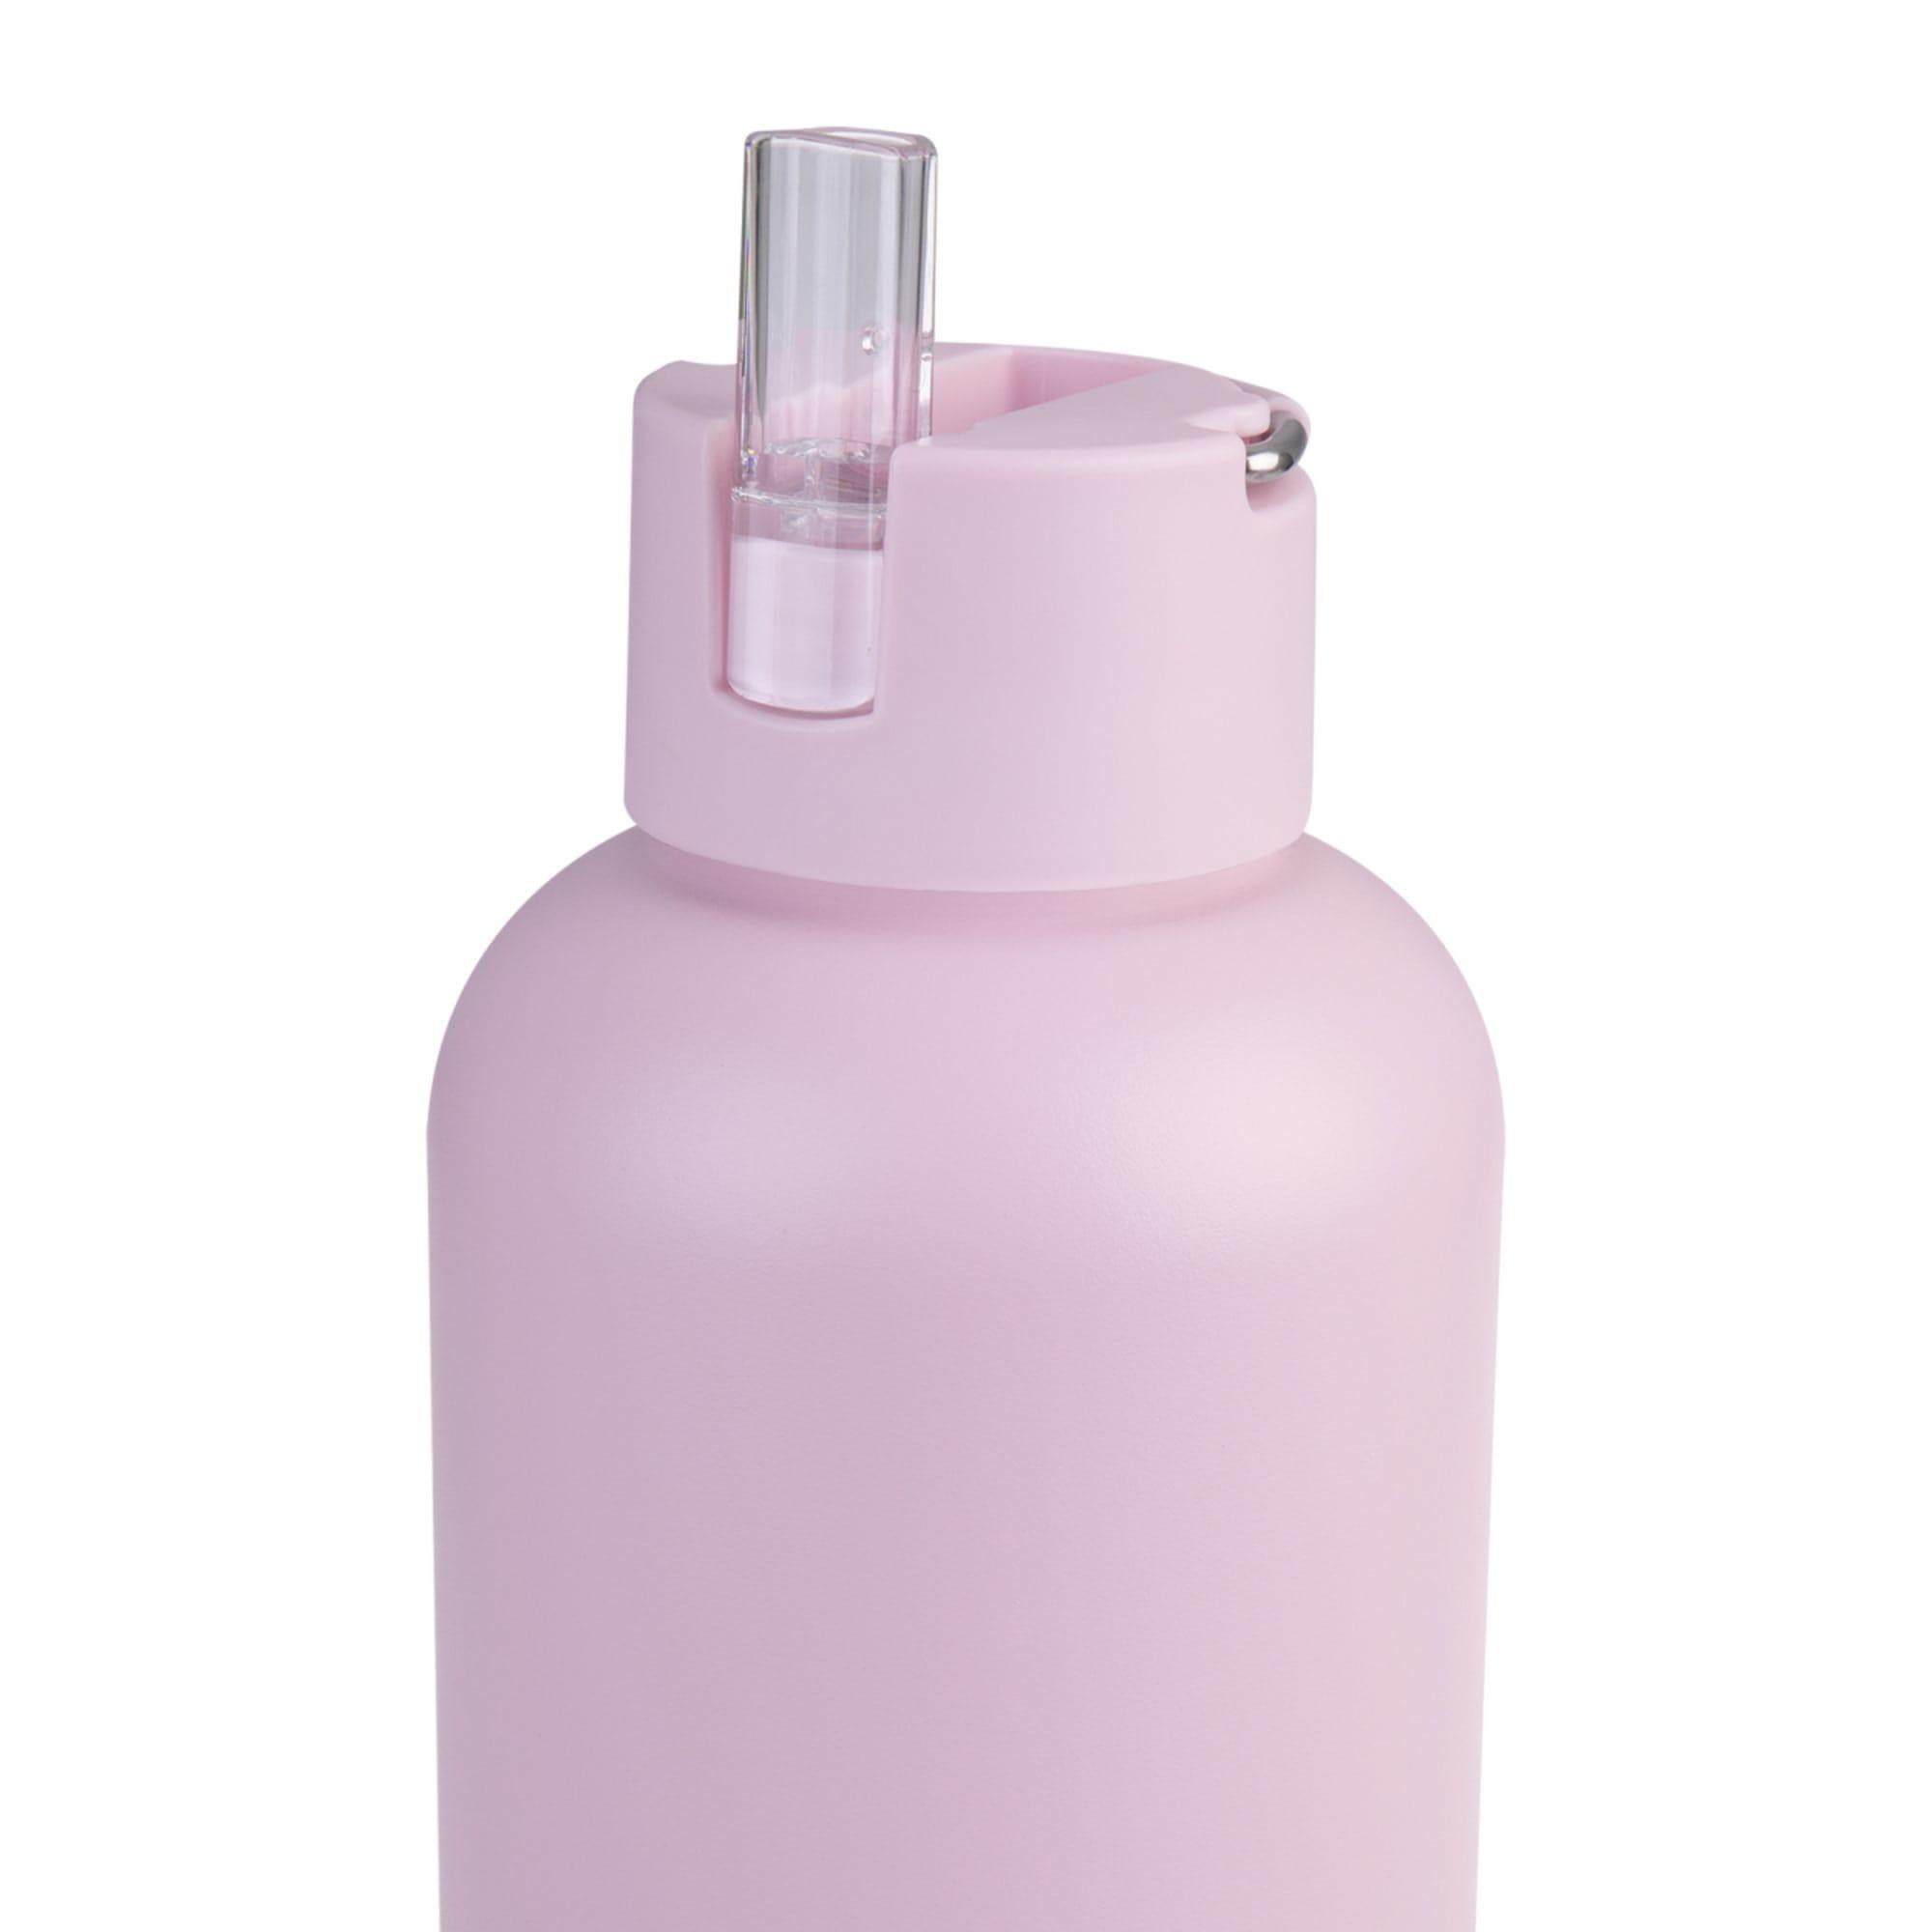 Oasis Moda Triple Wall Insulated Drink Bottle 1.5L Pink Lemonade Image 9